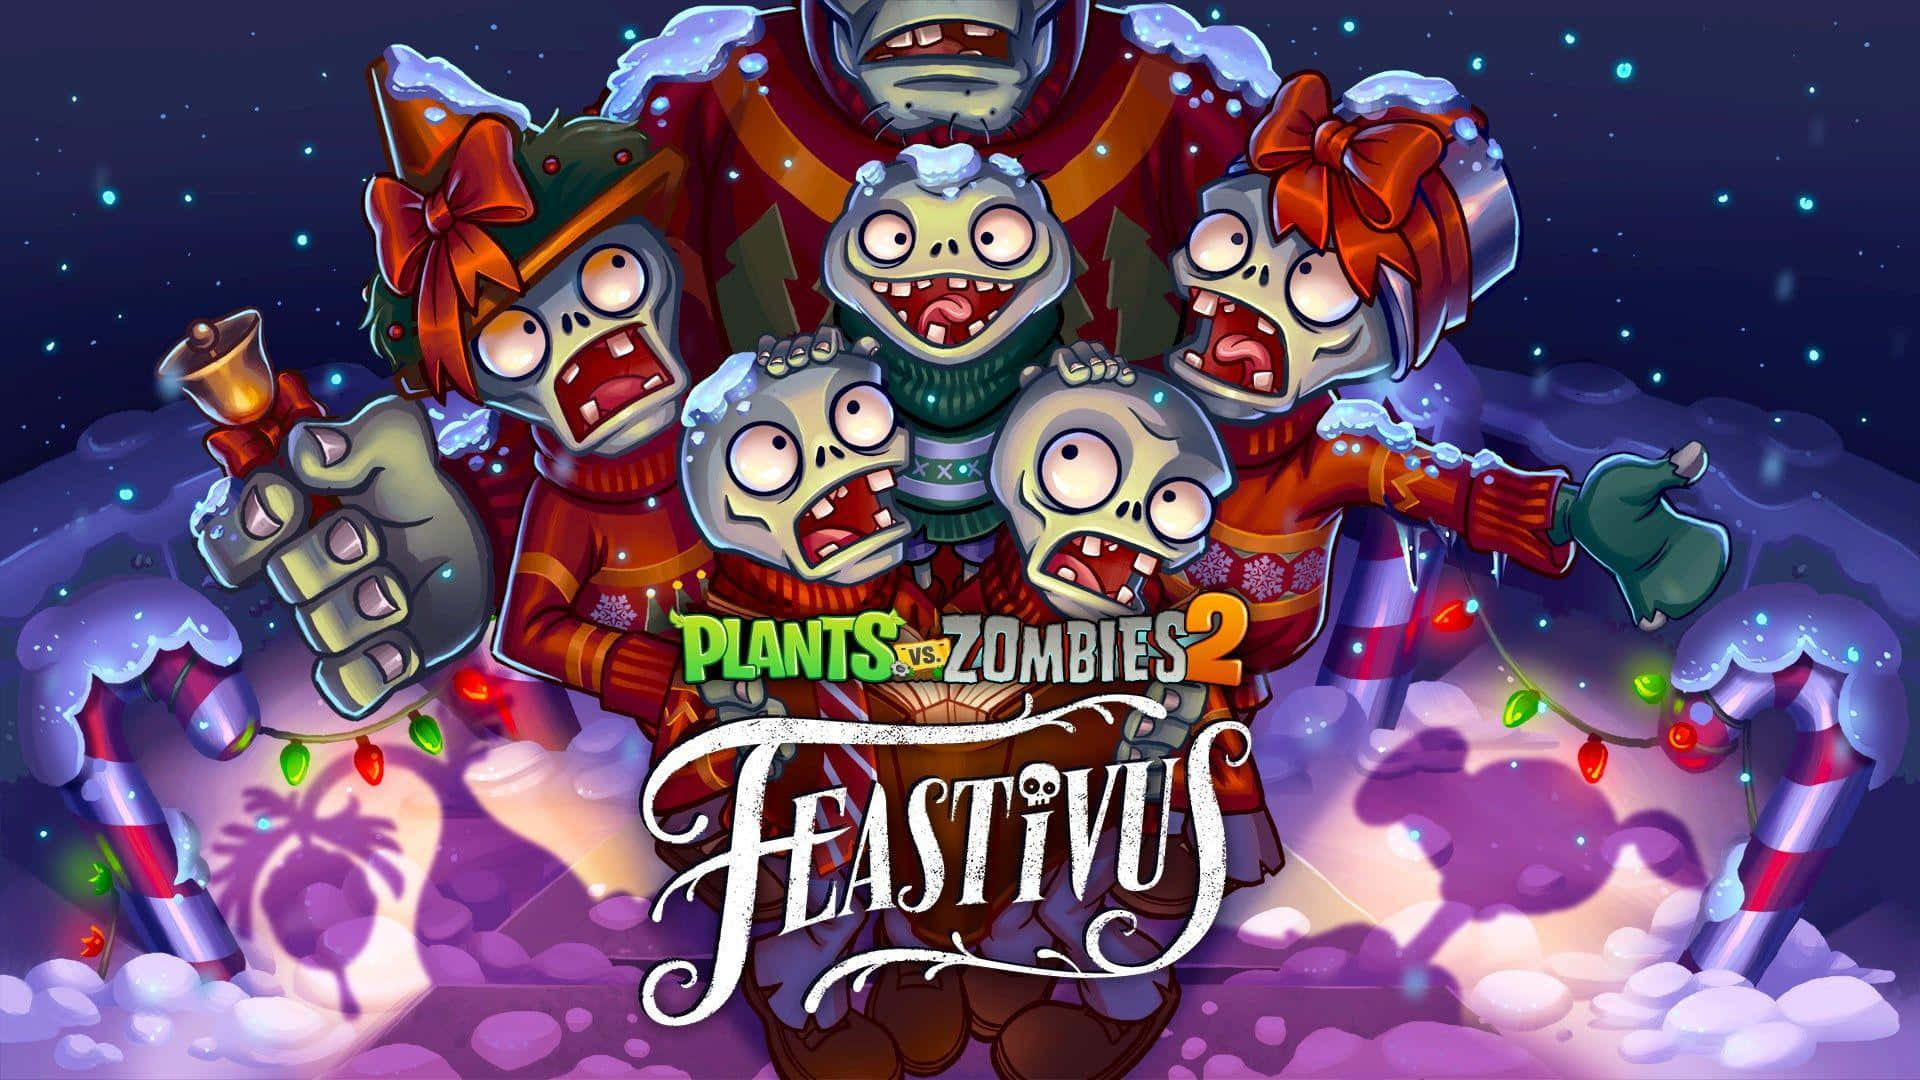 Plants vs Zombies - The Battle Continues